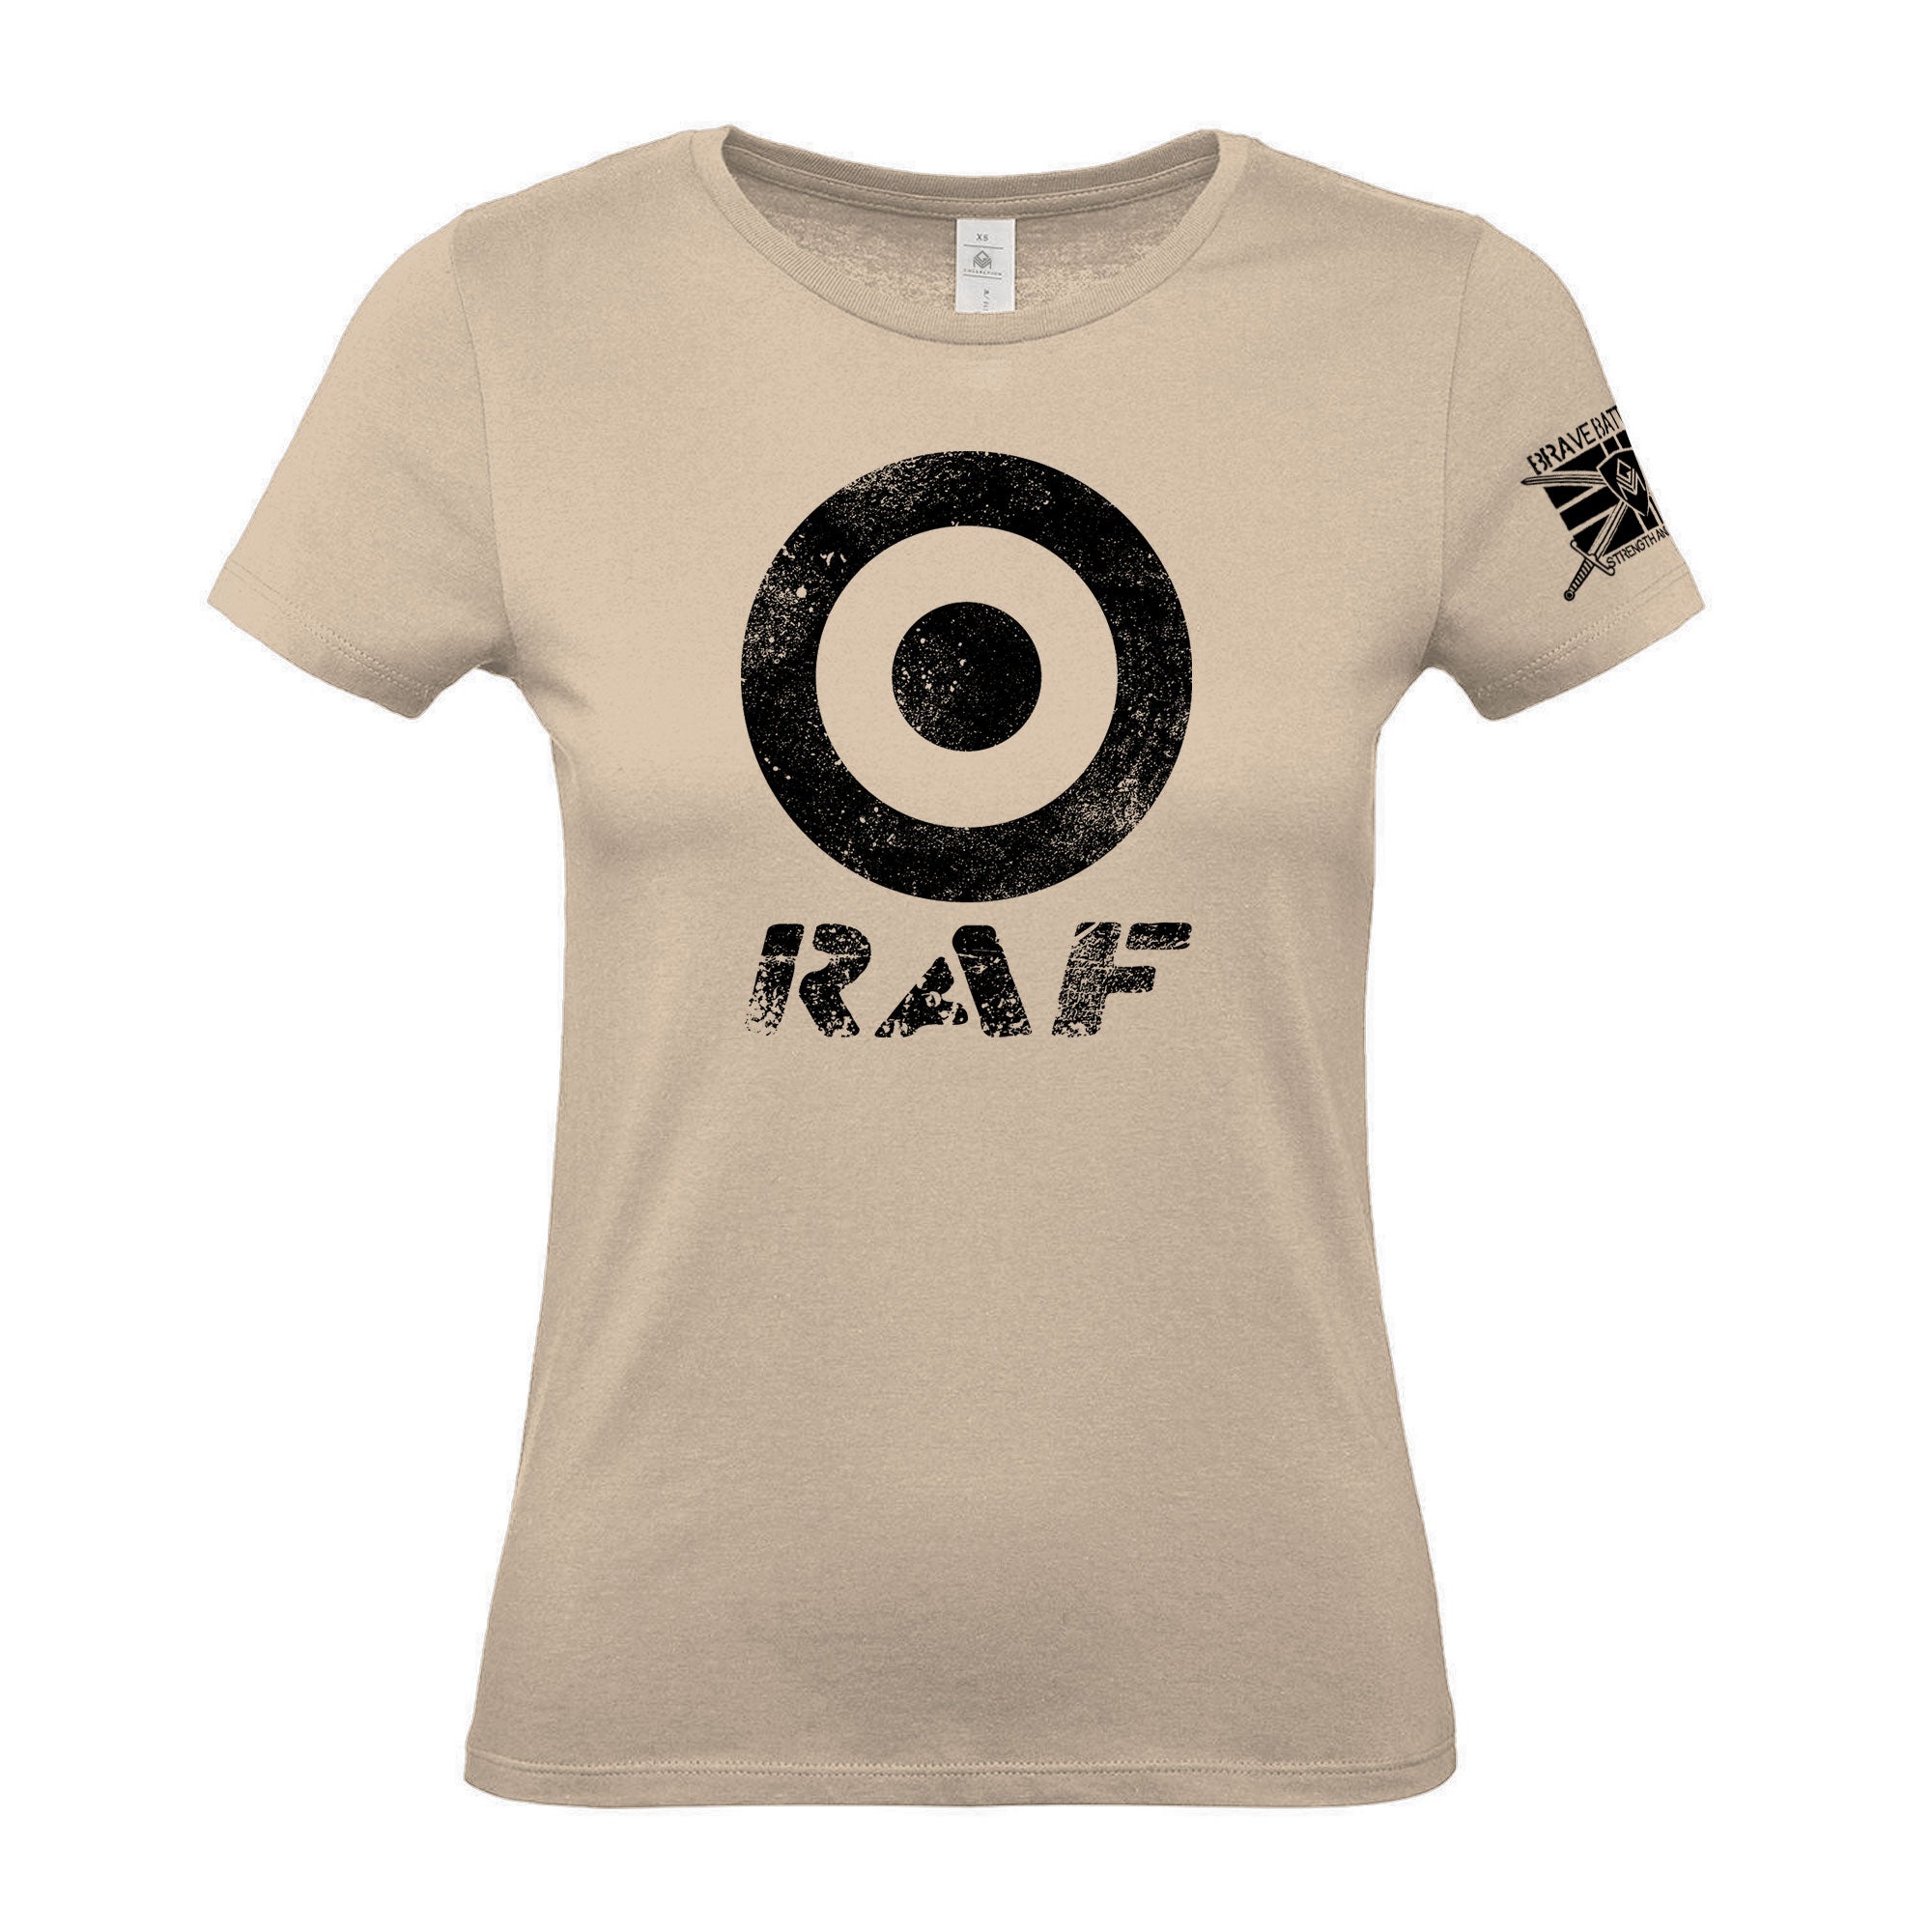 Royal Air Force Chest - Women's Gym T-Shirt